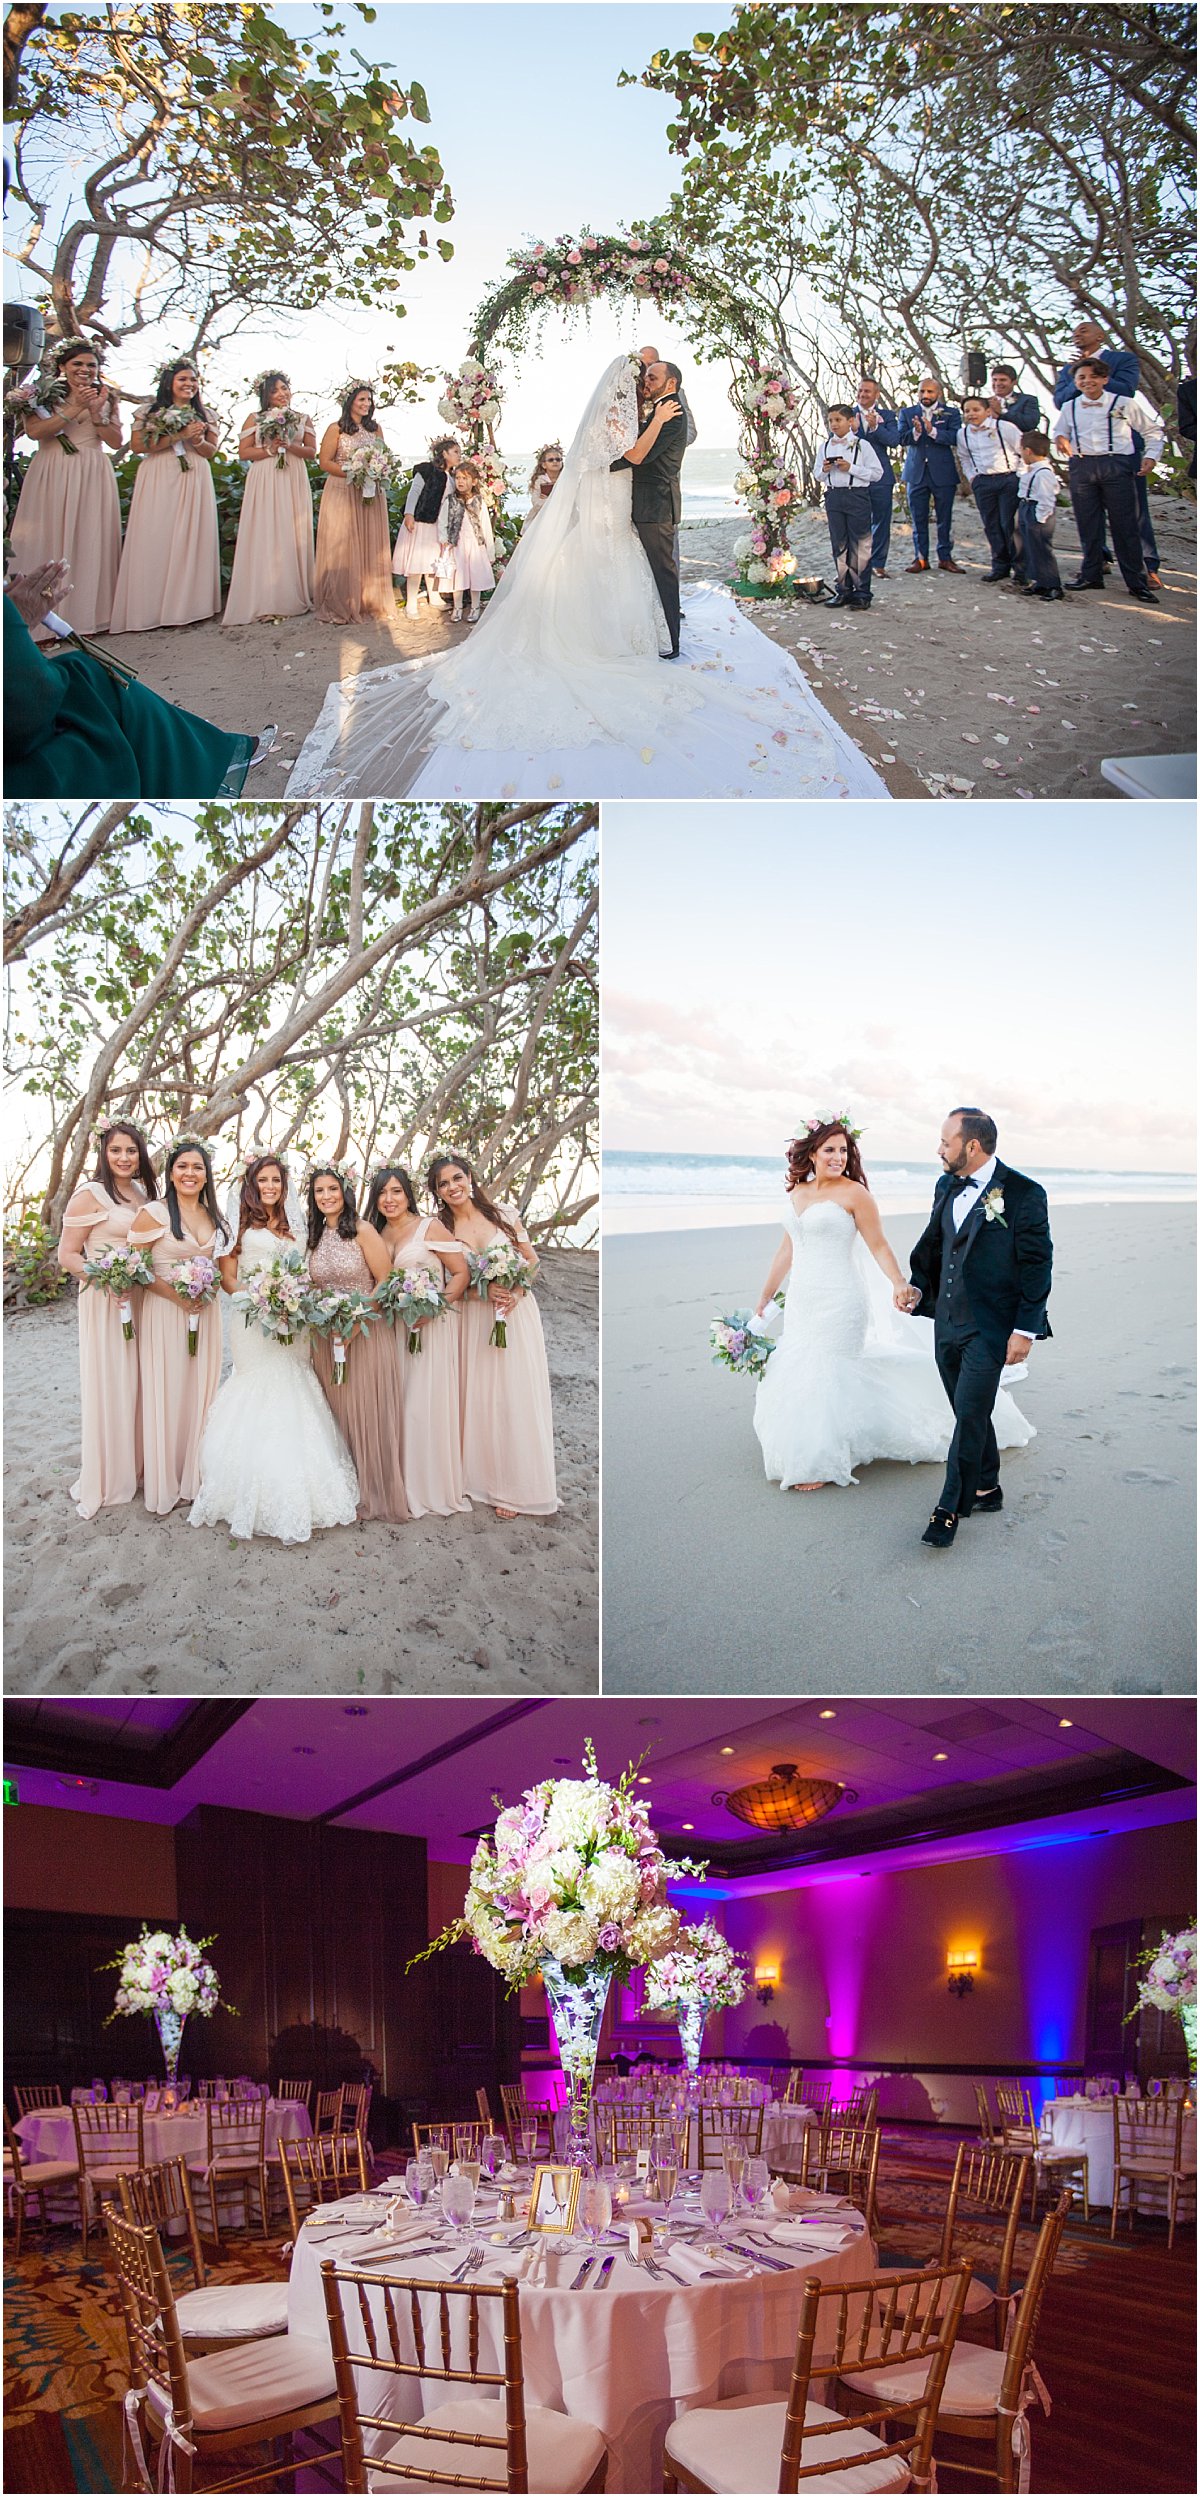 Jupiter Beach Resort | Top Palm Beach Wedding Venue | Married in Palm Beach | www.marriedinpalmbeach.com | Krystal Zaskey Photography